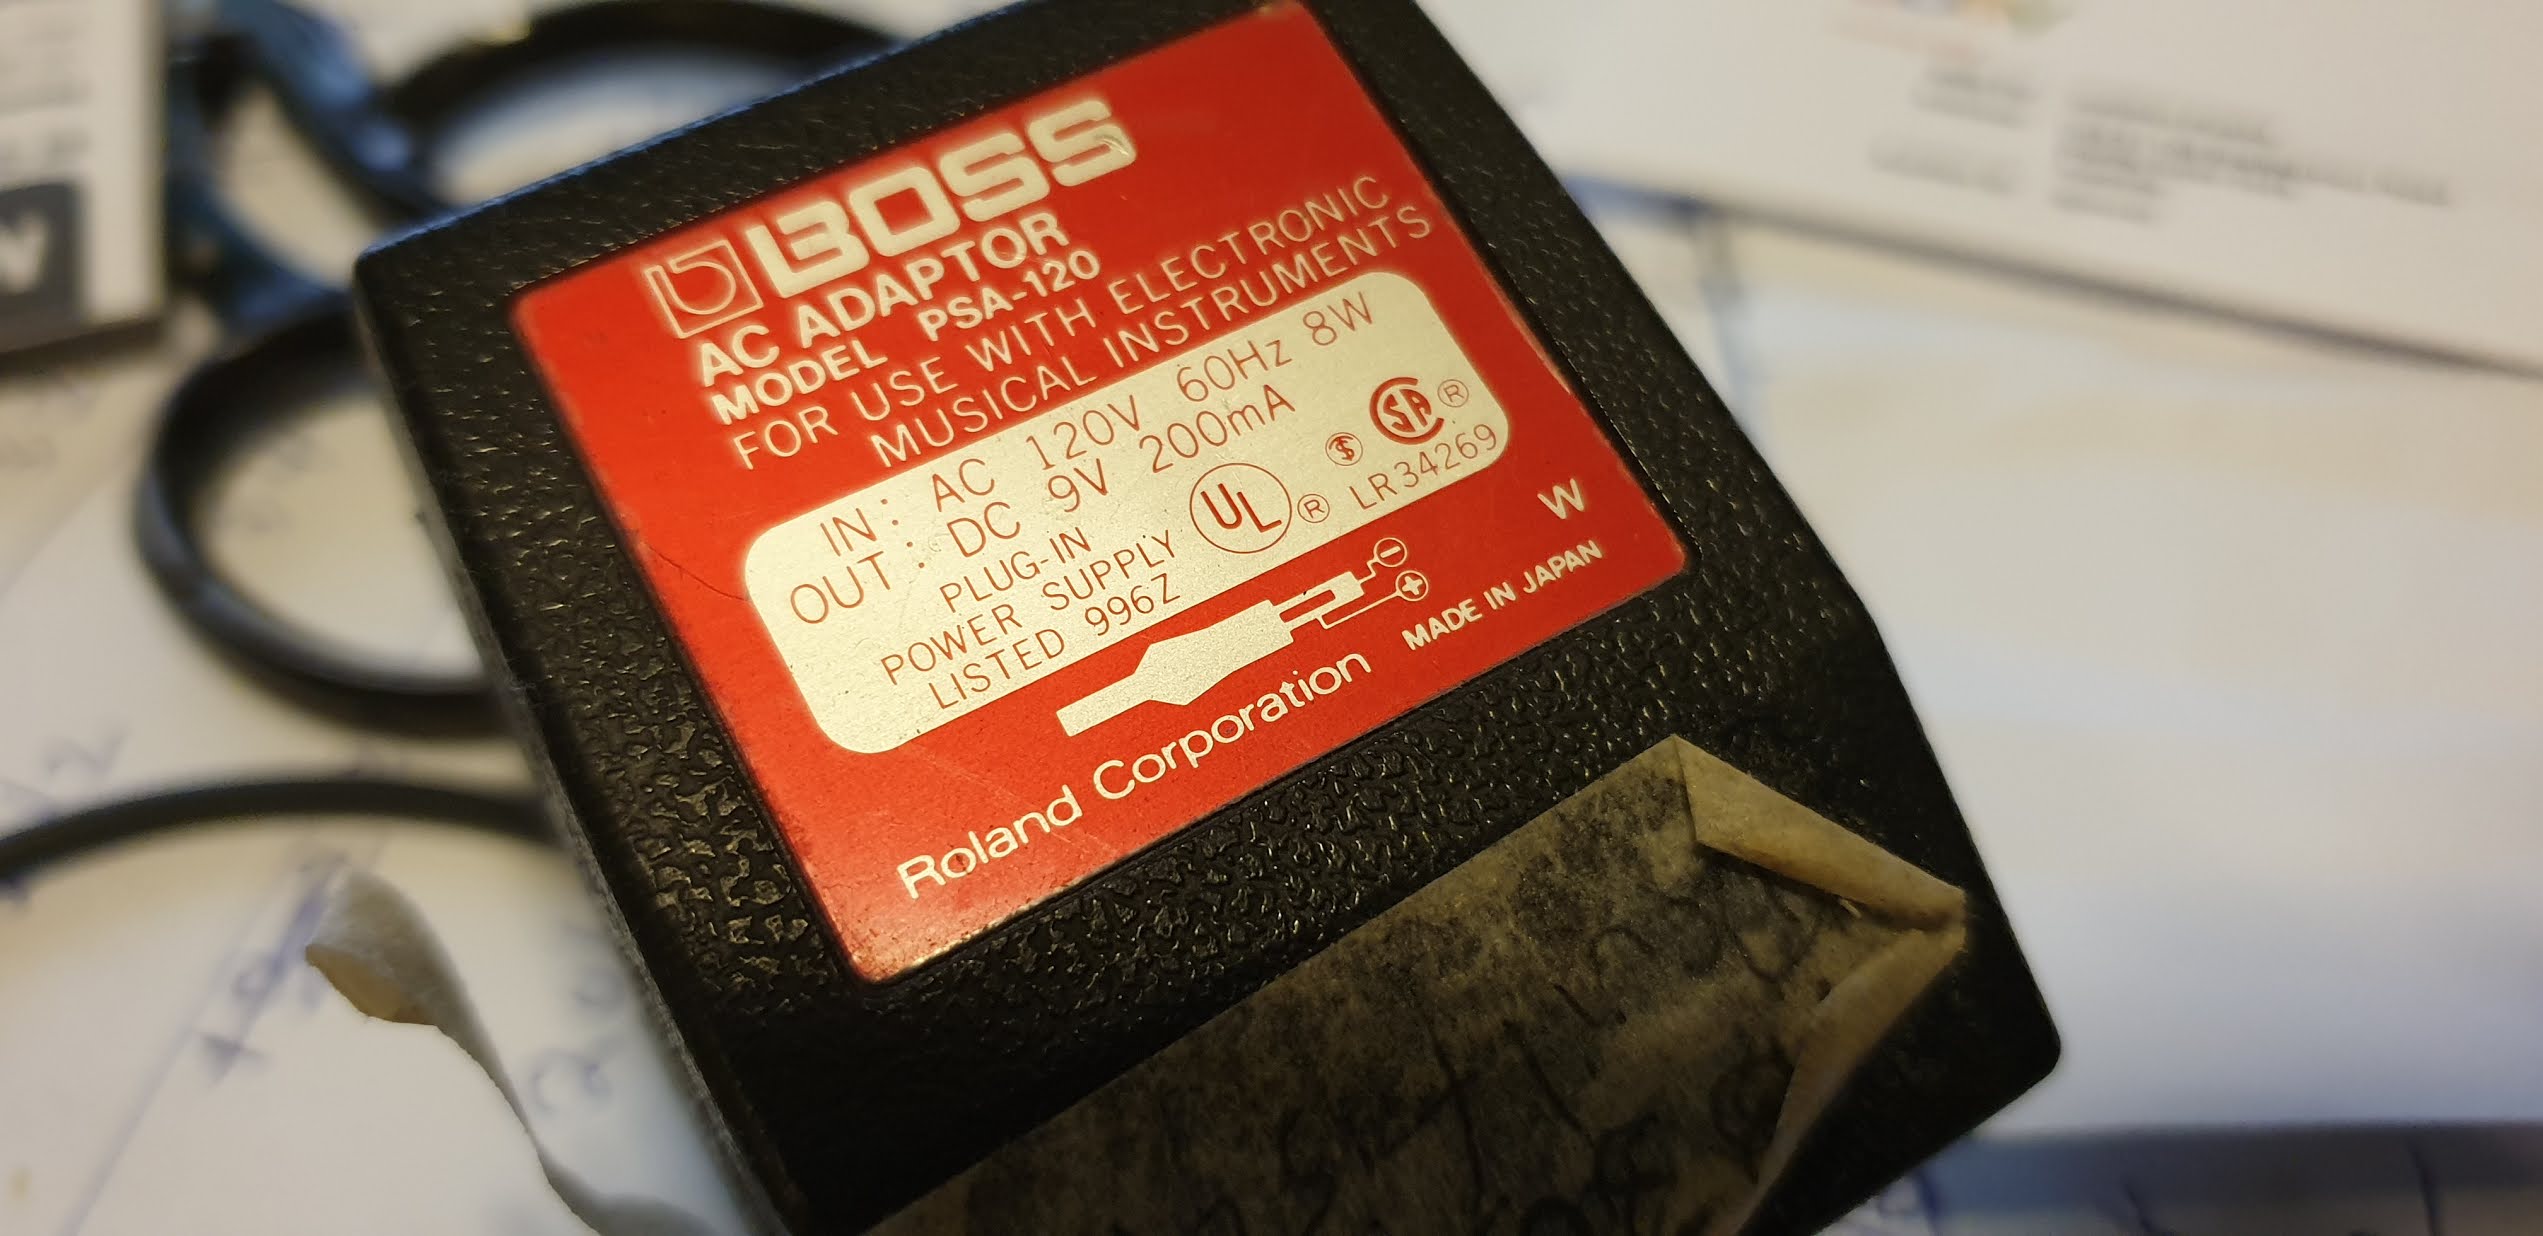 JonDent - Exploring Electronic Music: BOSS ACA vs Power adaptors - powering your old BOSS pedals